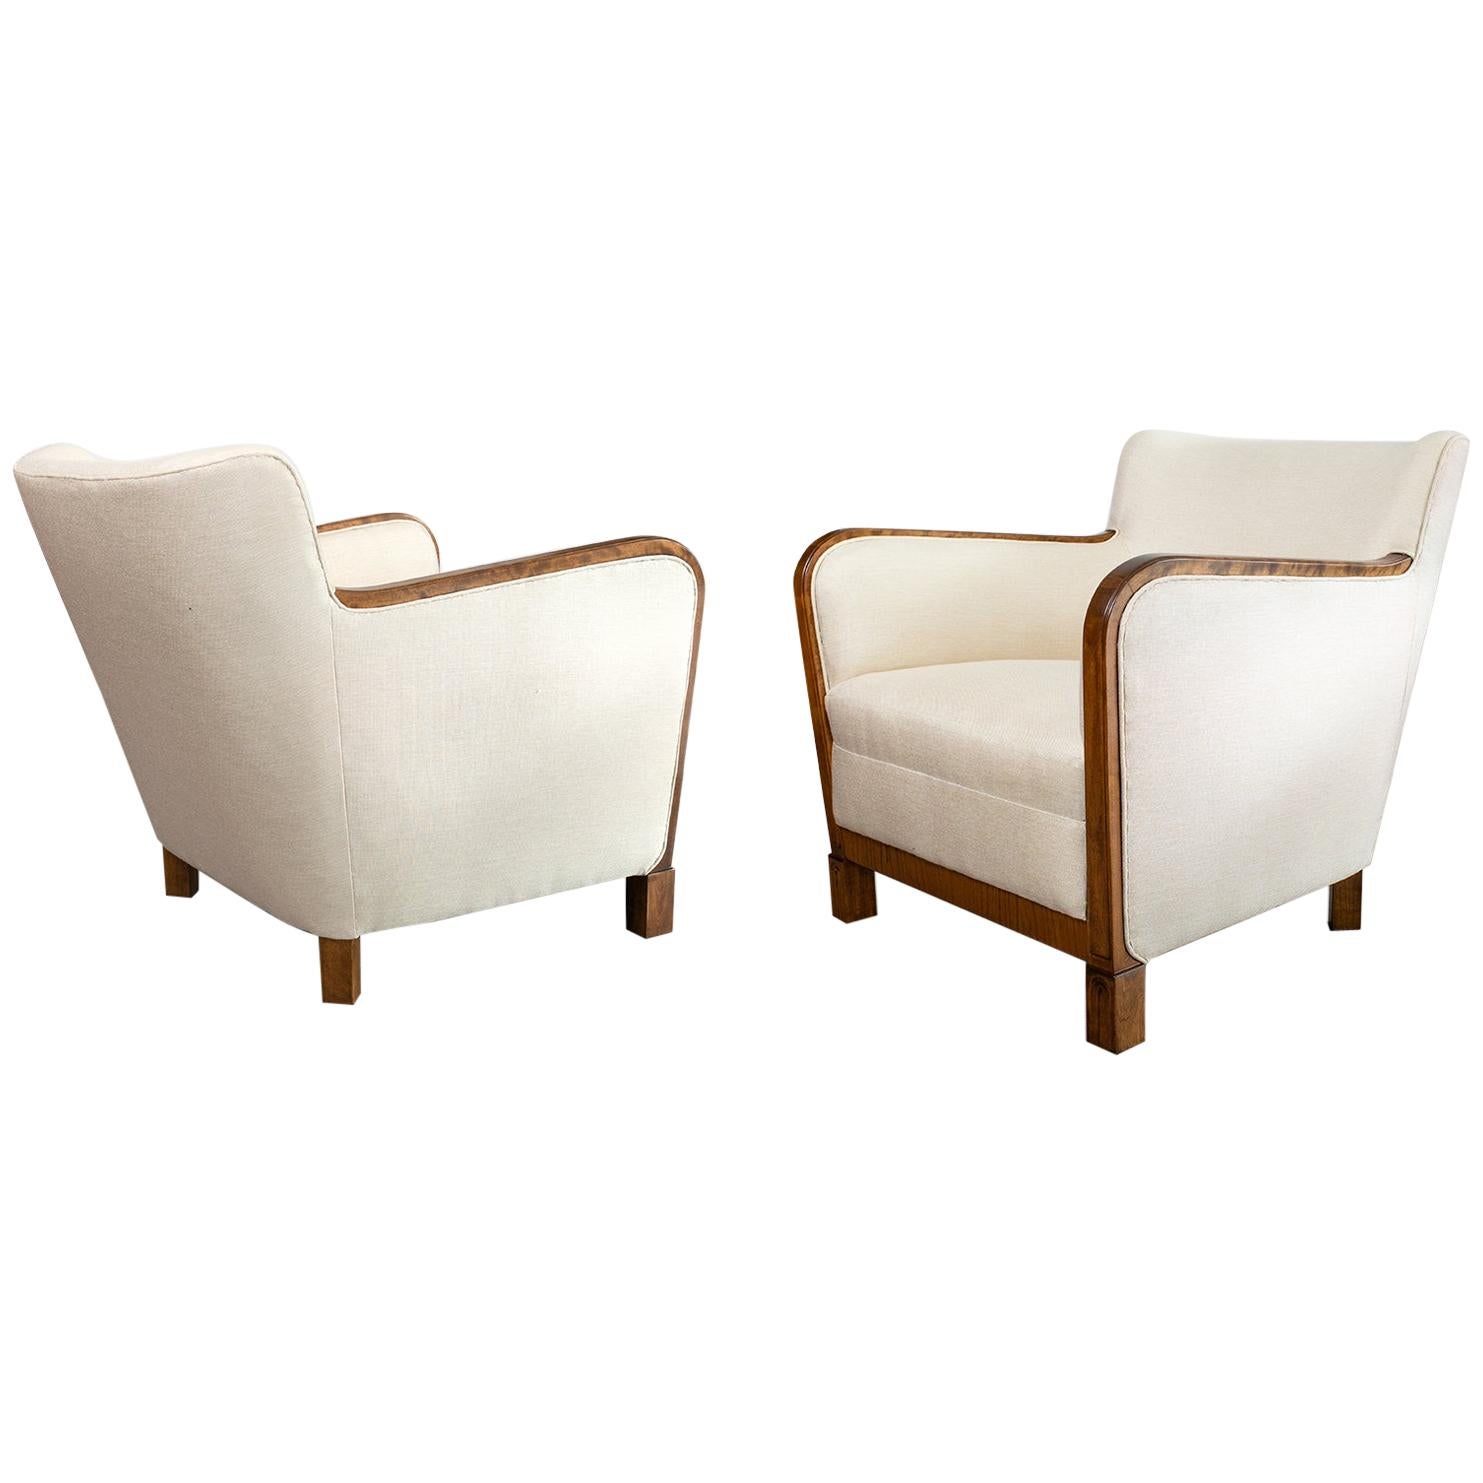 Sleek Pair of Scandinavian Modern Sycamore Chairs